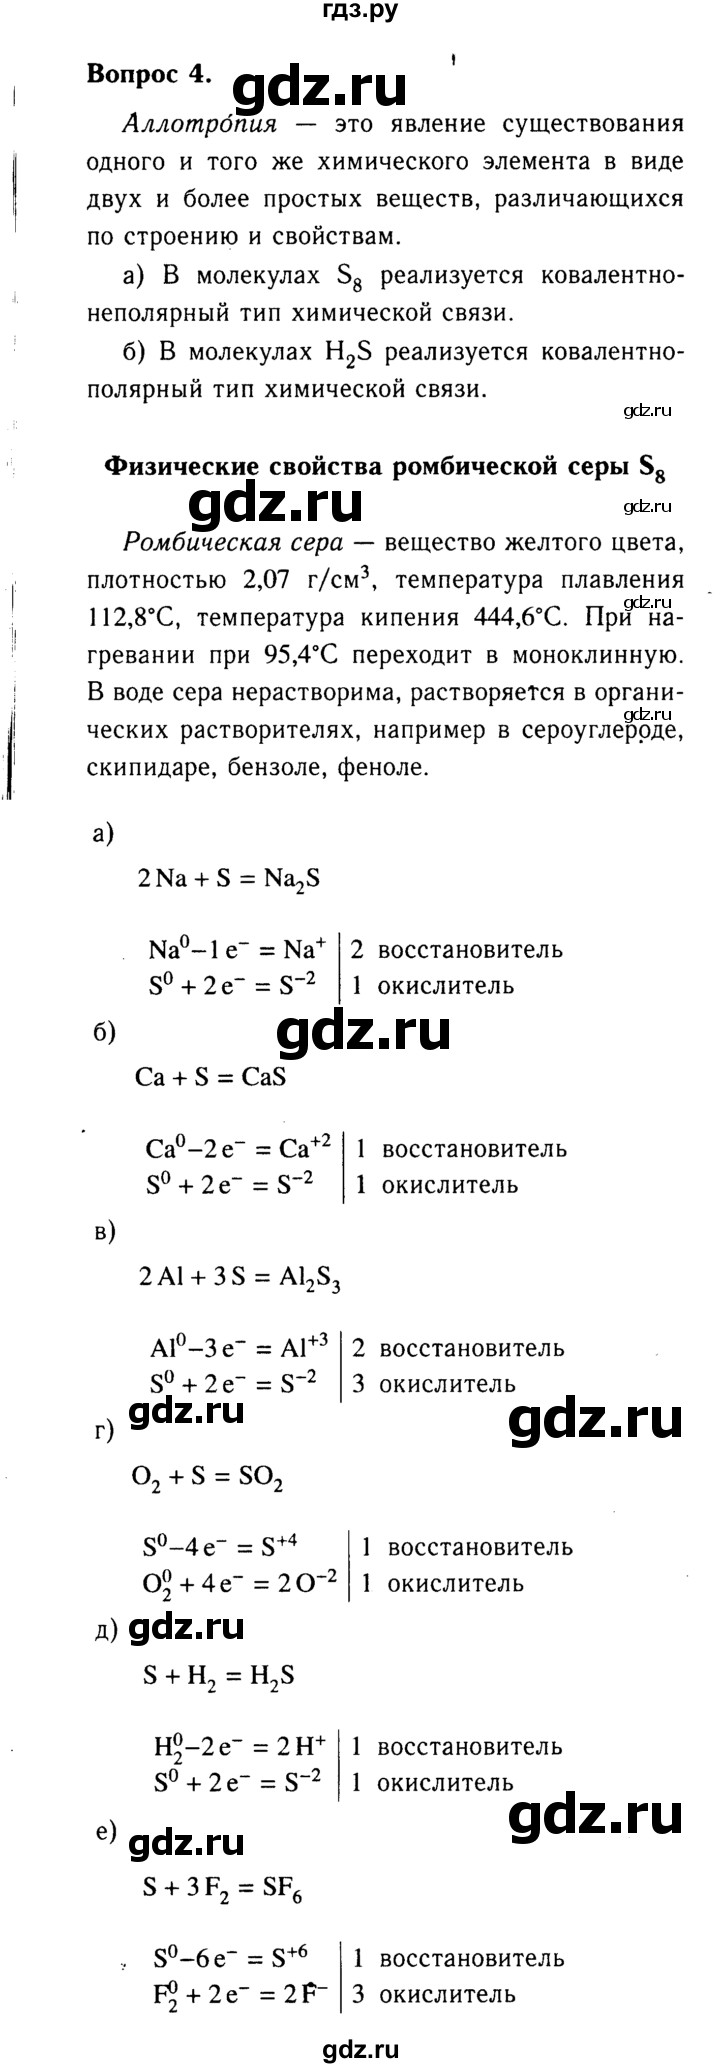 ГДЗ по химии 9 класс  Габриелян   §1 - 4, Решебник 2